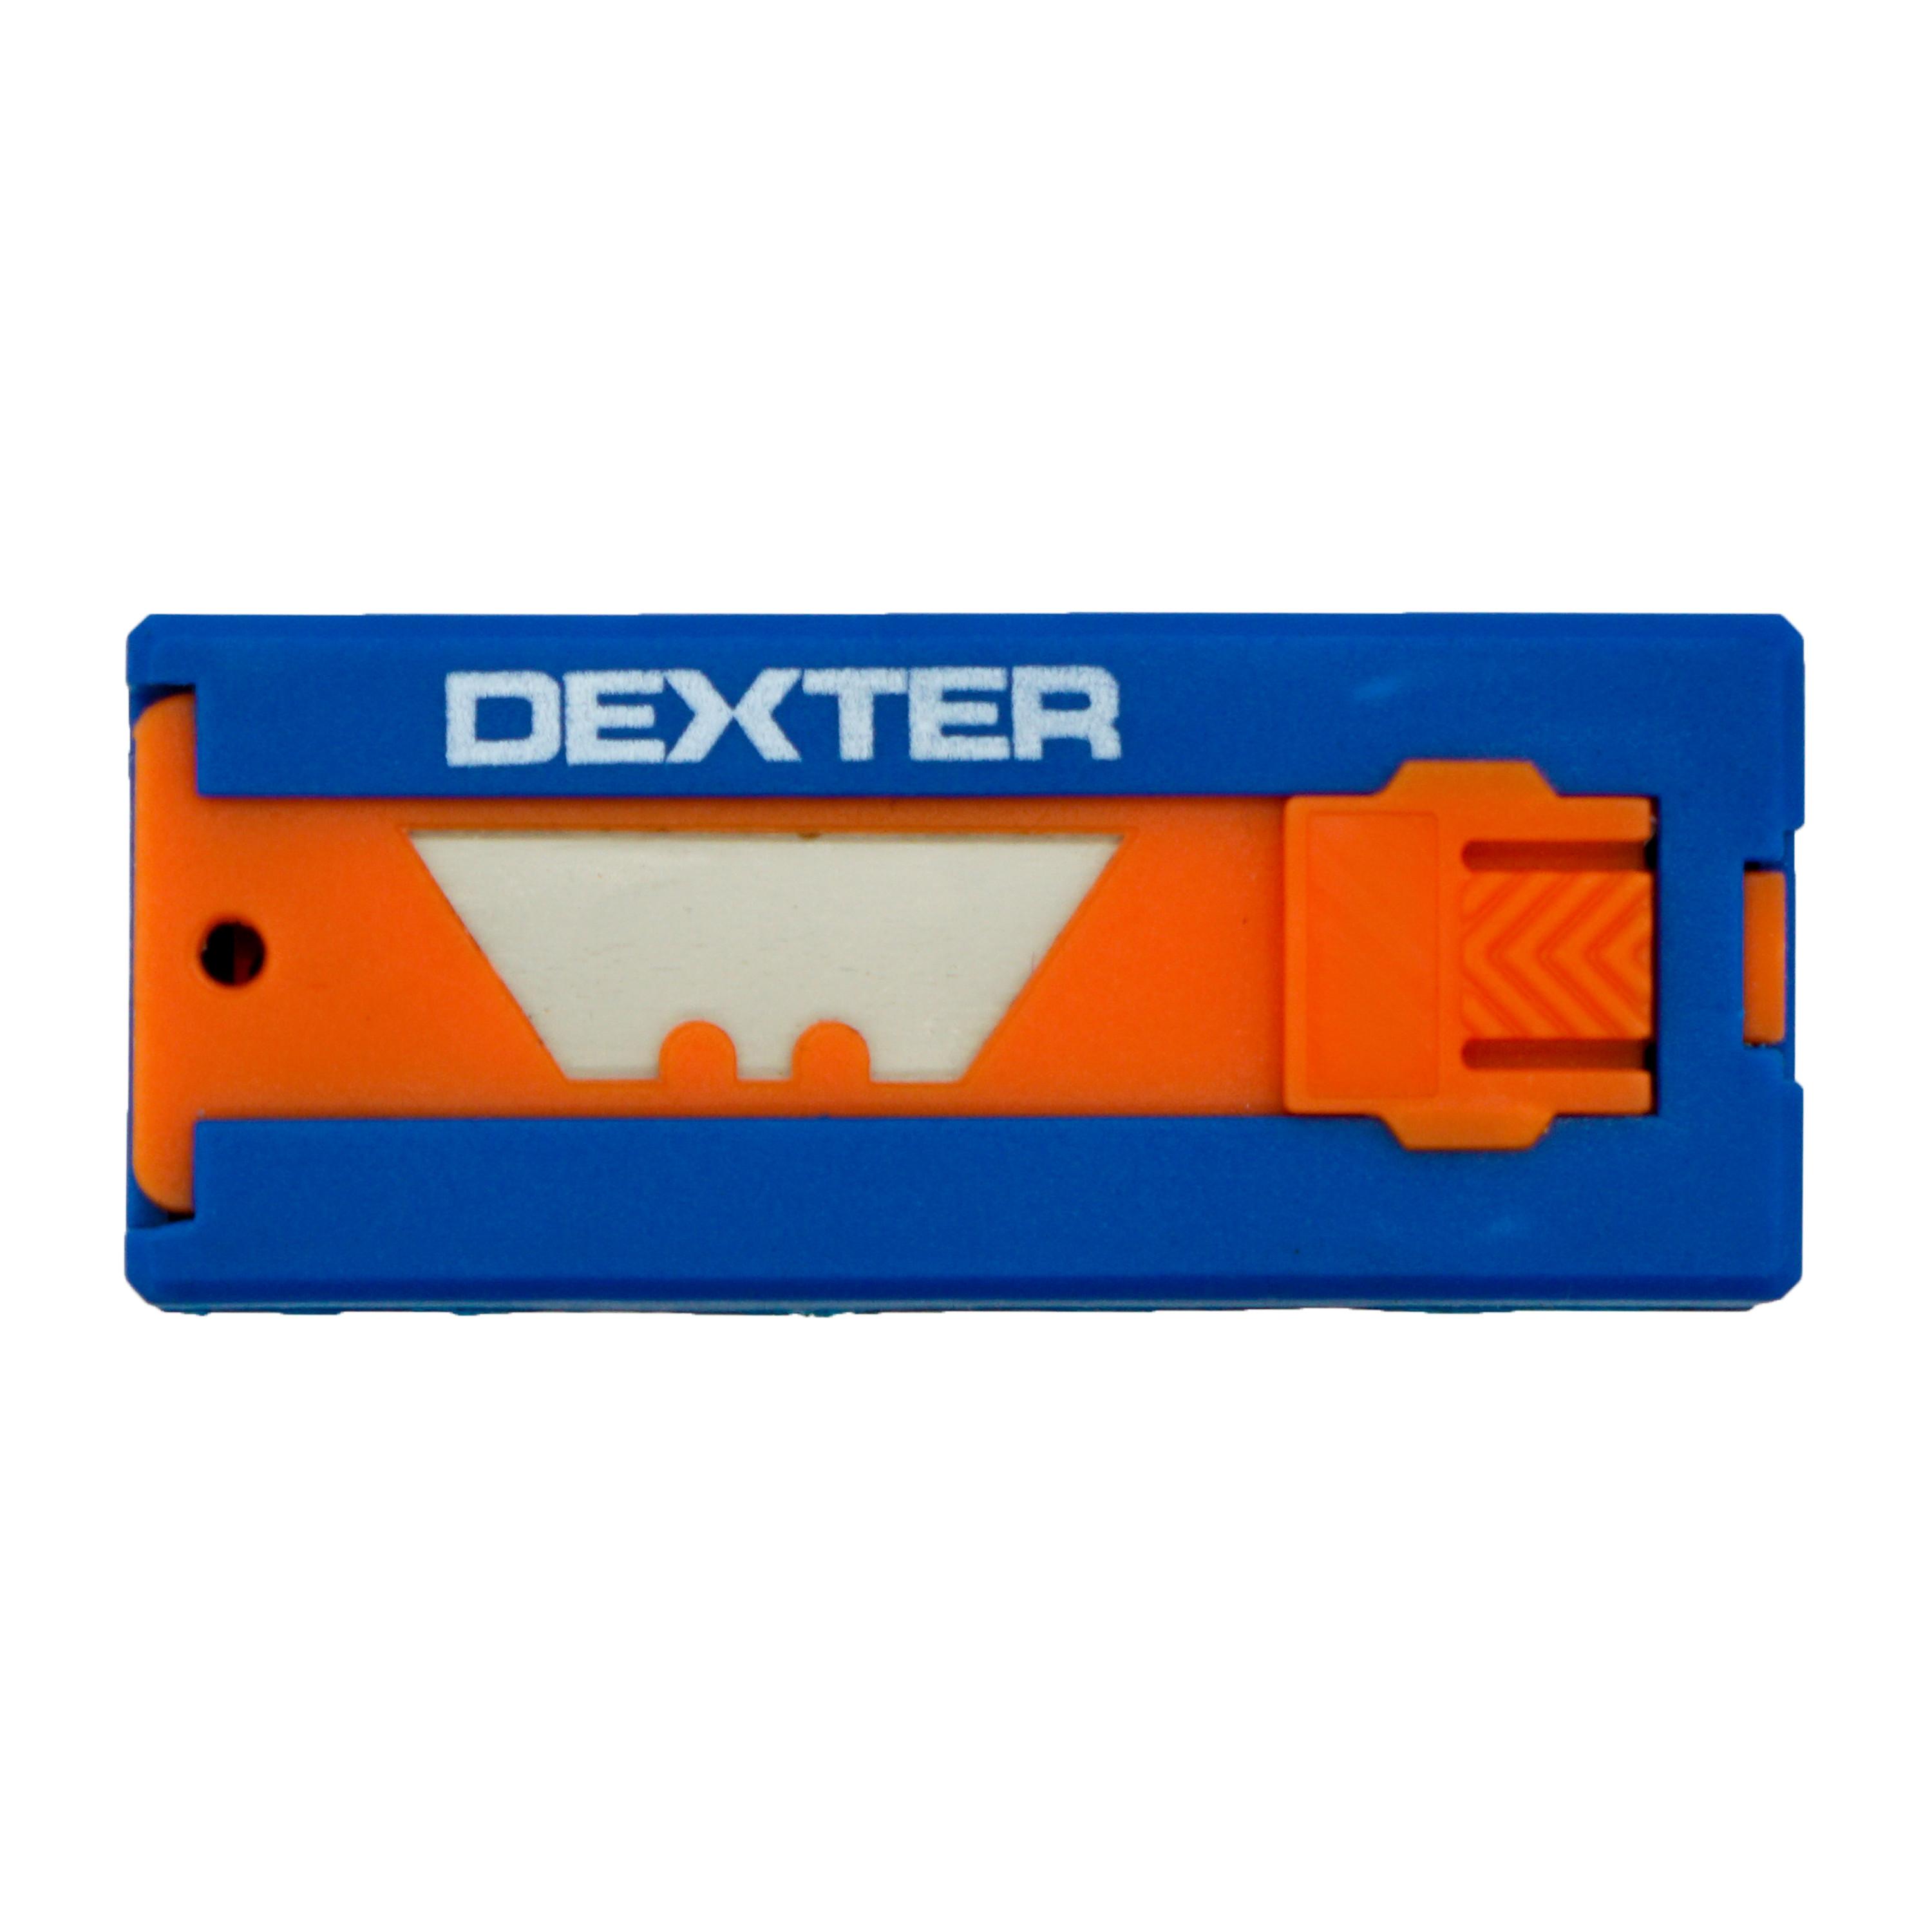  трапециевидное Dexter 19 мм, 5 шт. –   по цене 595 .